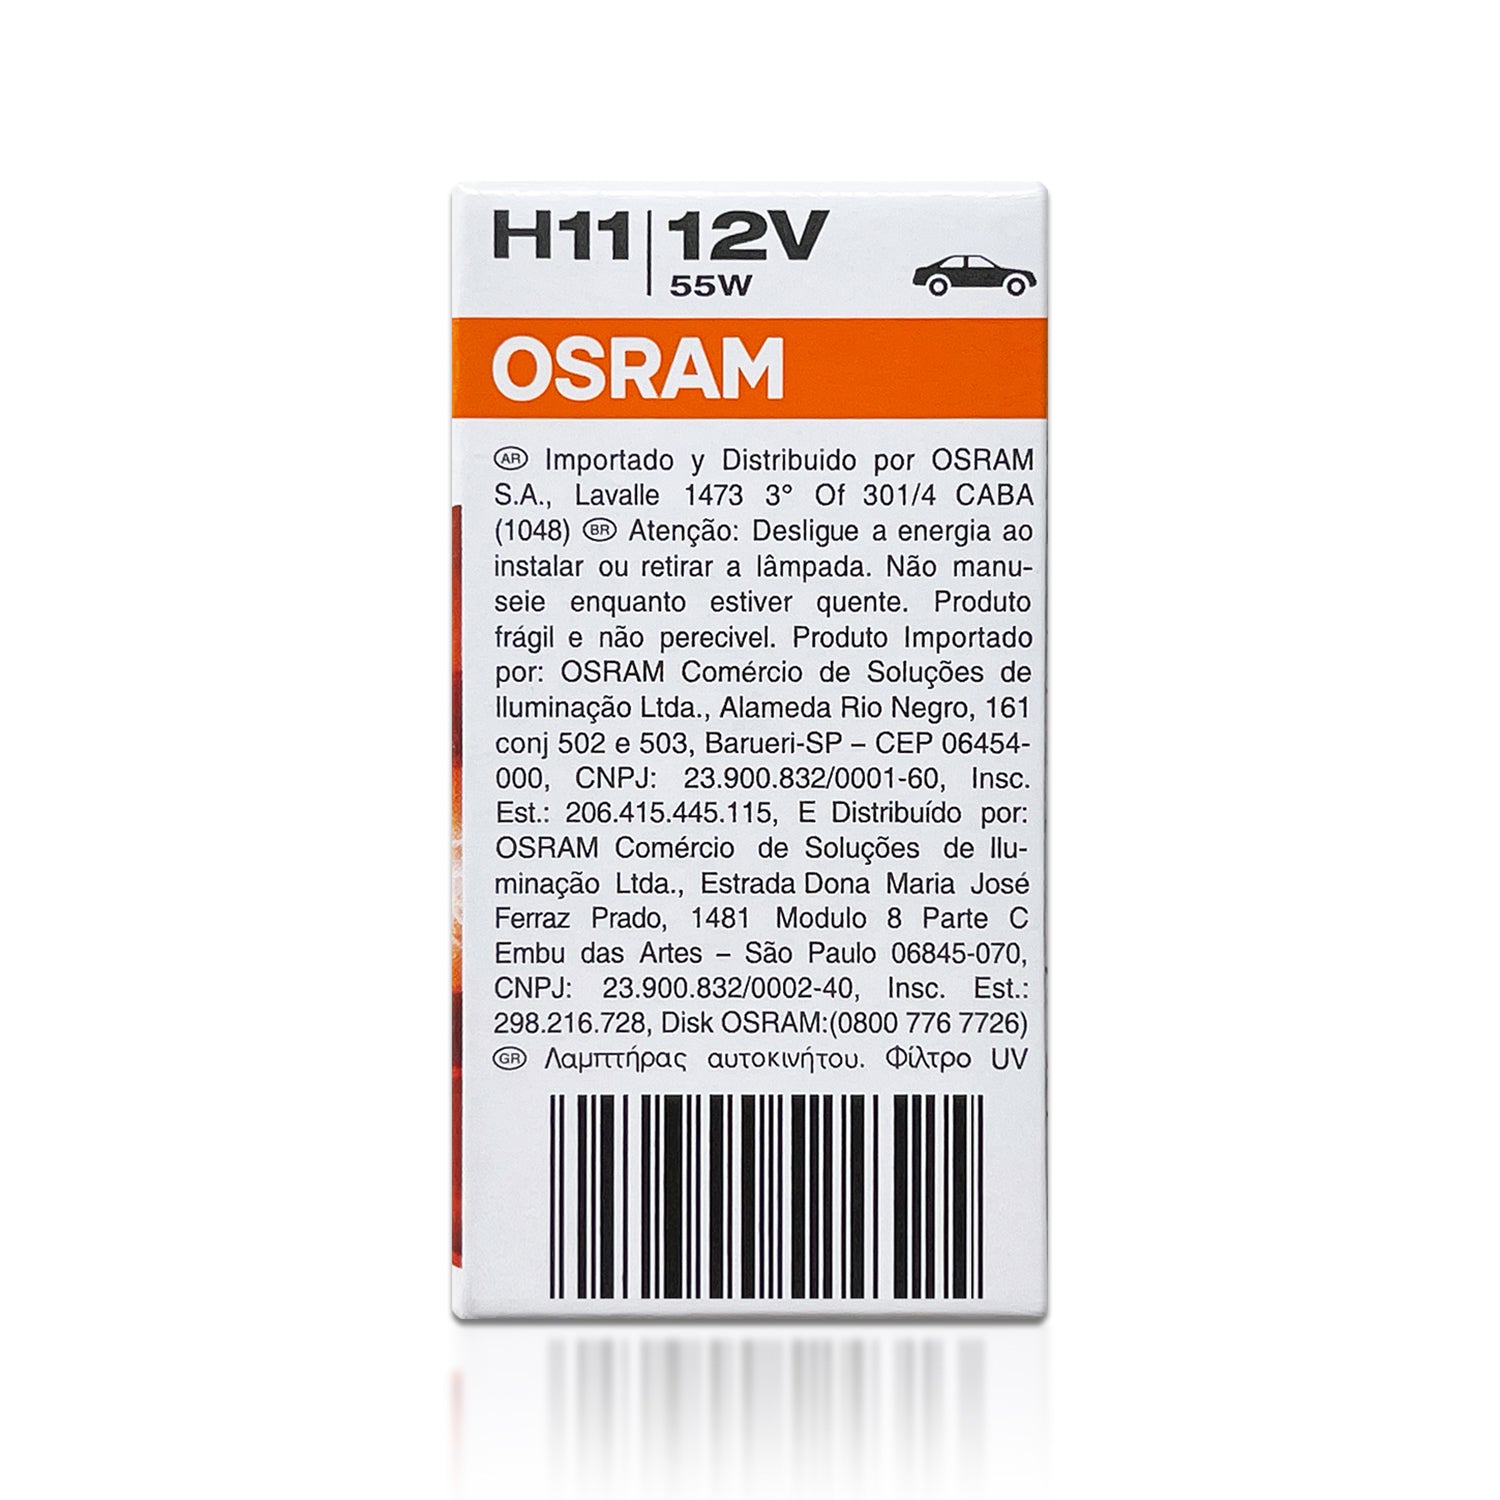 Ampoule halogène OSRAM 64211ULT-HCB Ultra Life H11 55 W 1 paire(s)